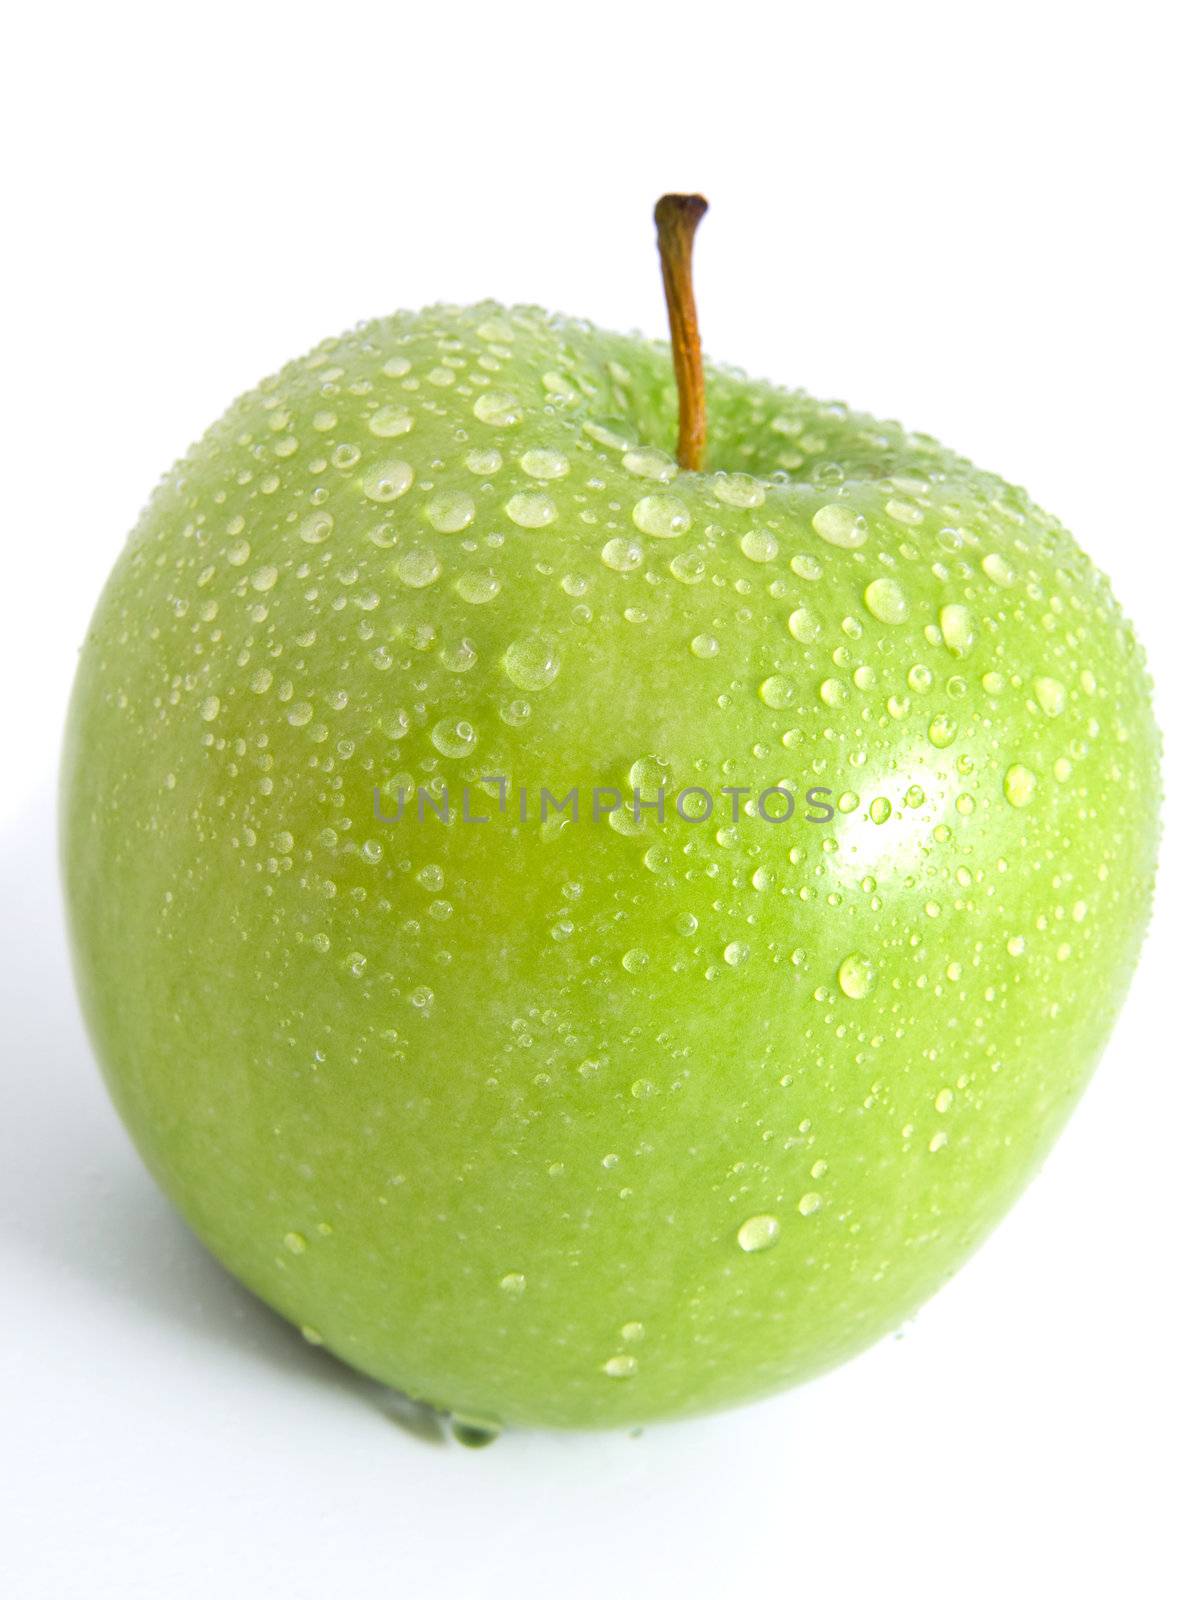 Juicy ripe green apple on a white background  by motorolka